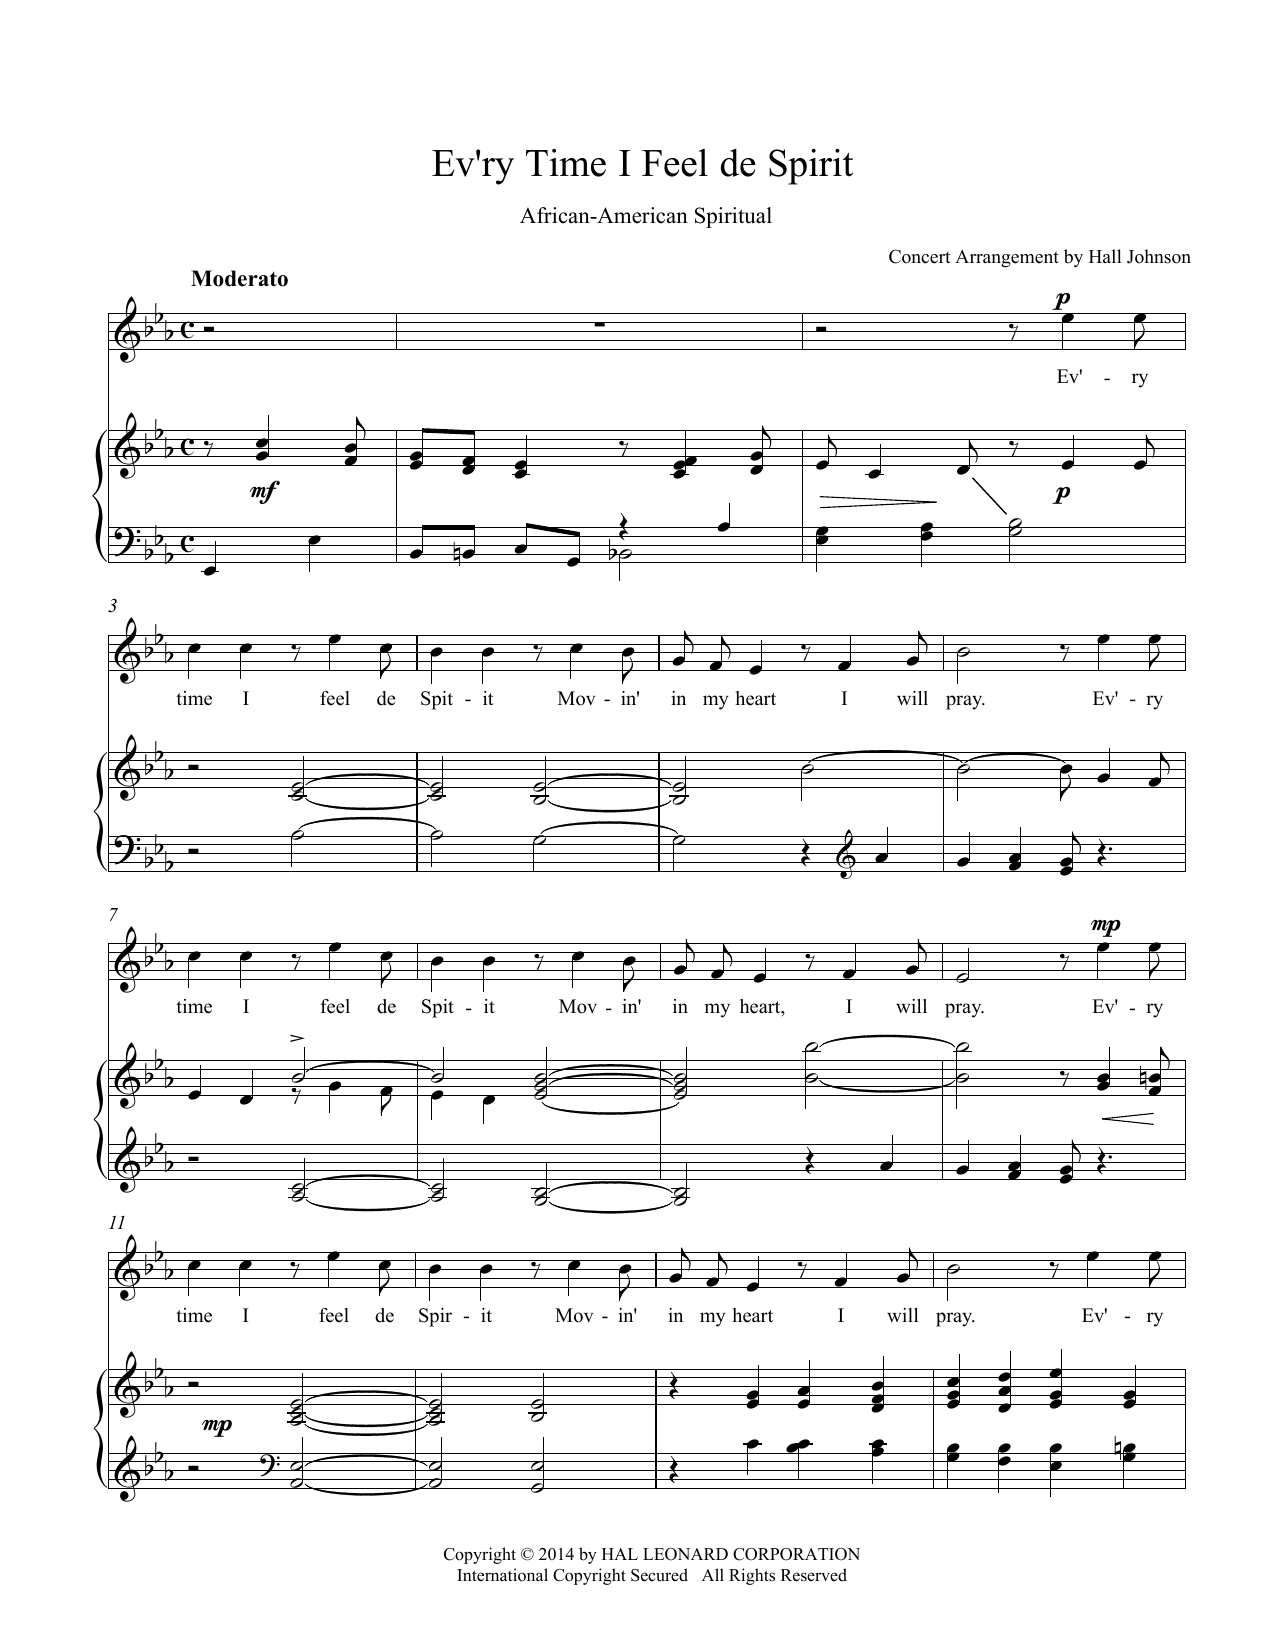 Hall Johnson Ev'ry Time I Feel de Spirit (E-flat) sheet music notes and chords arranged for Piano & Vocal